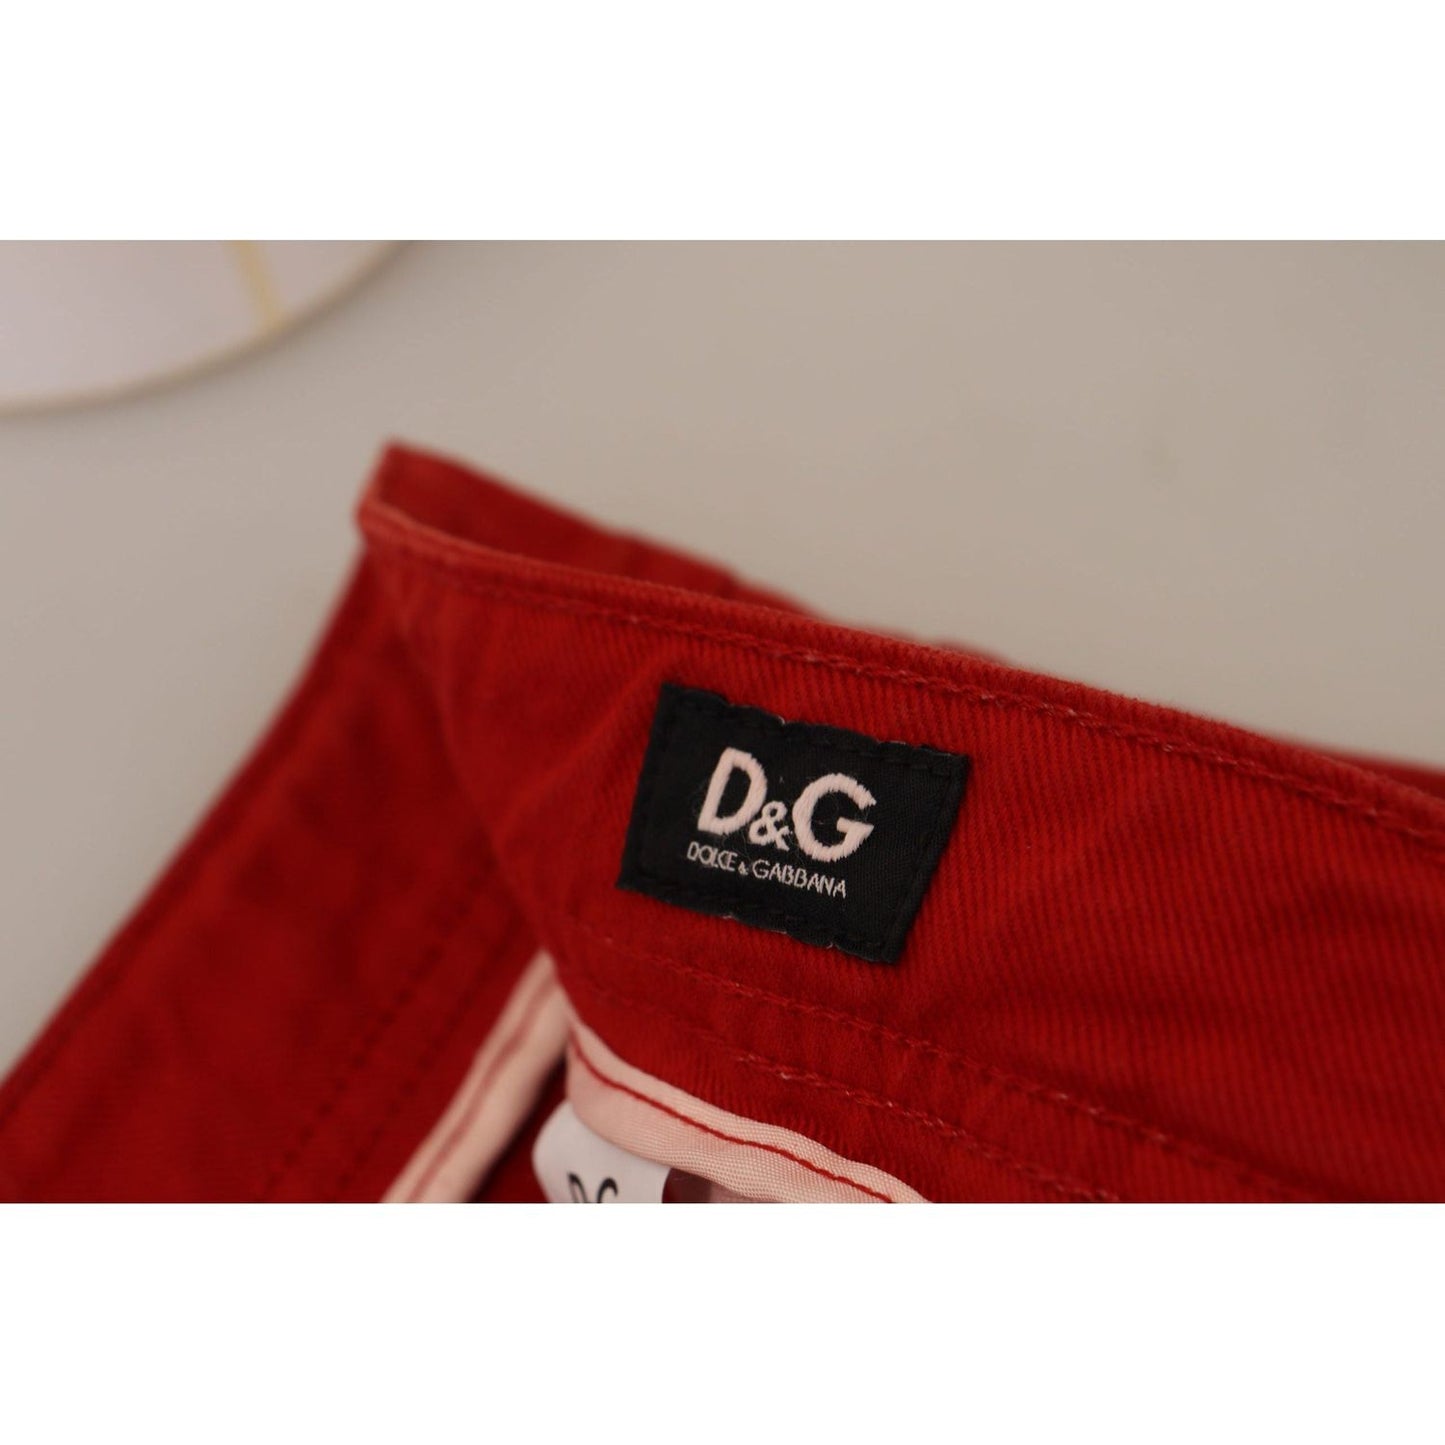 Dolce & Gabbana Chic Red Cotton Denim Pants red-cotton-straight-fit-men-denim-jeans IMG_7859-scaled-2dd86586-258.jpg